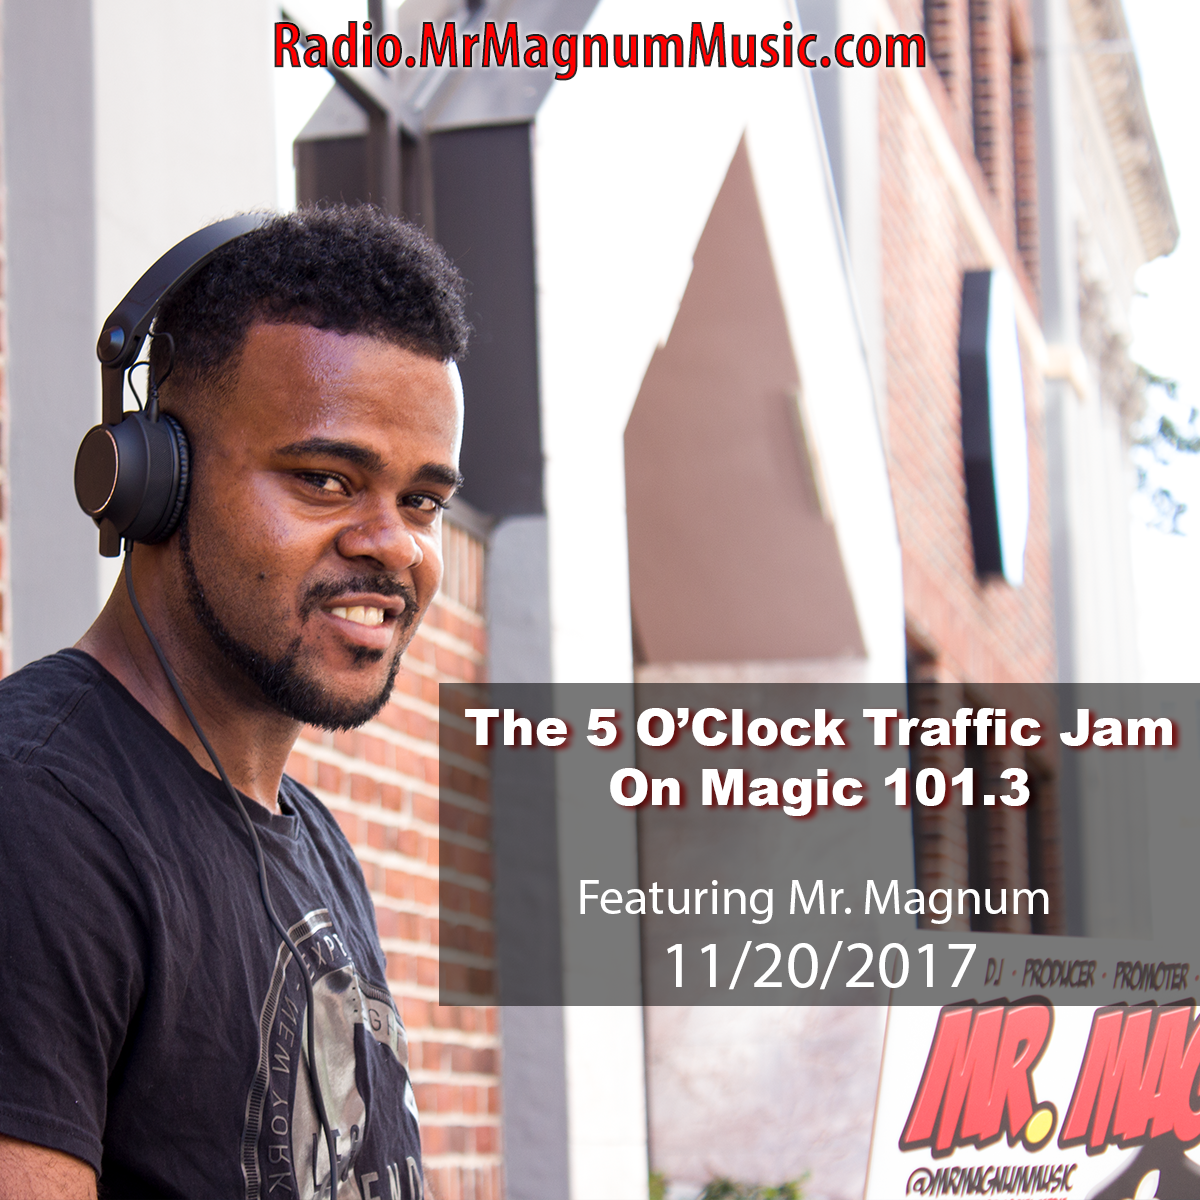 The 5 O'Clock Traffic Jam 20171120 featuring Gainesville's #1 DJ, Mr. Magnum on Magic 101.3